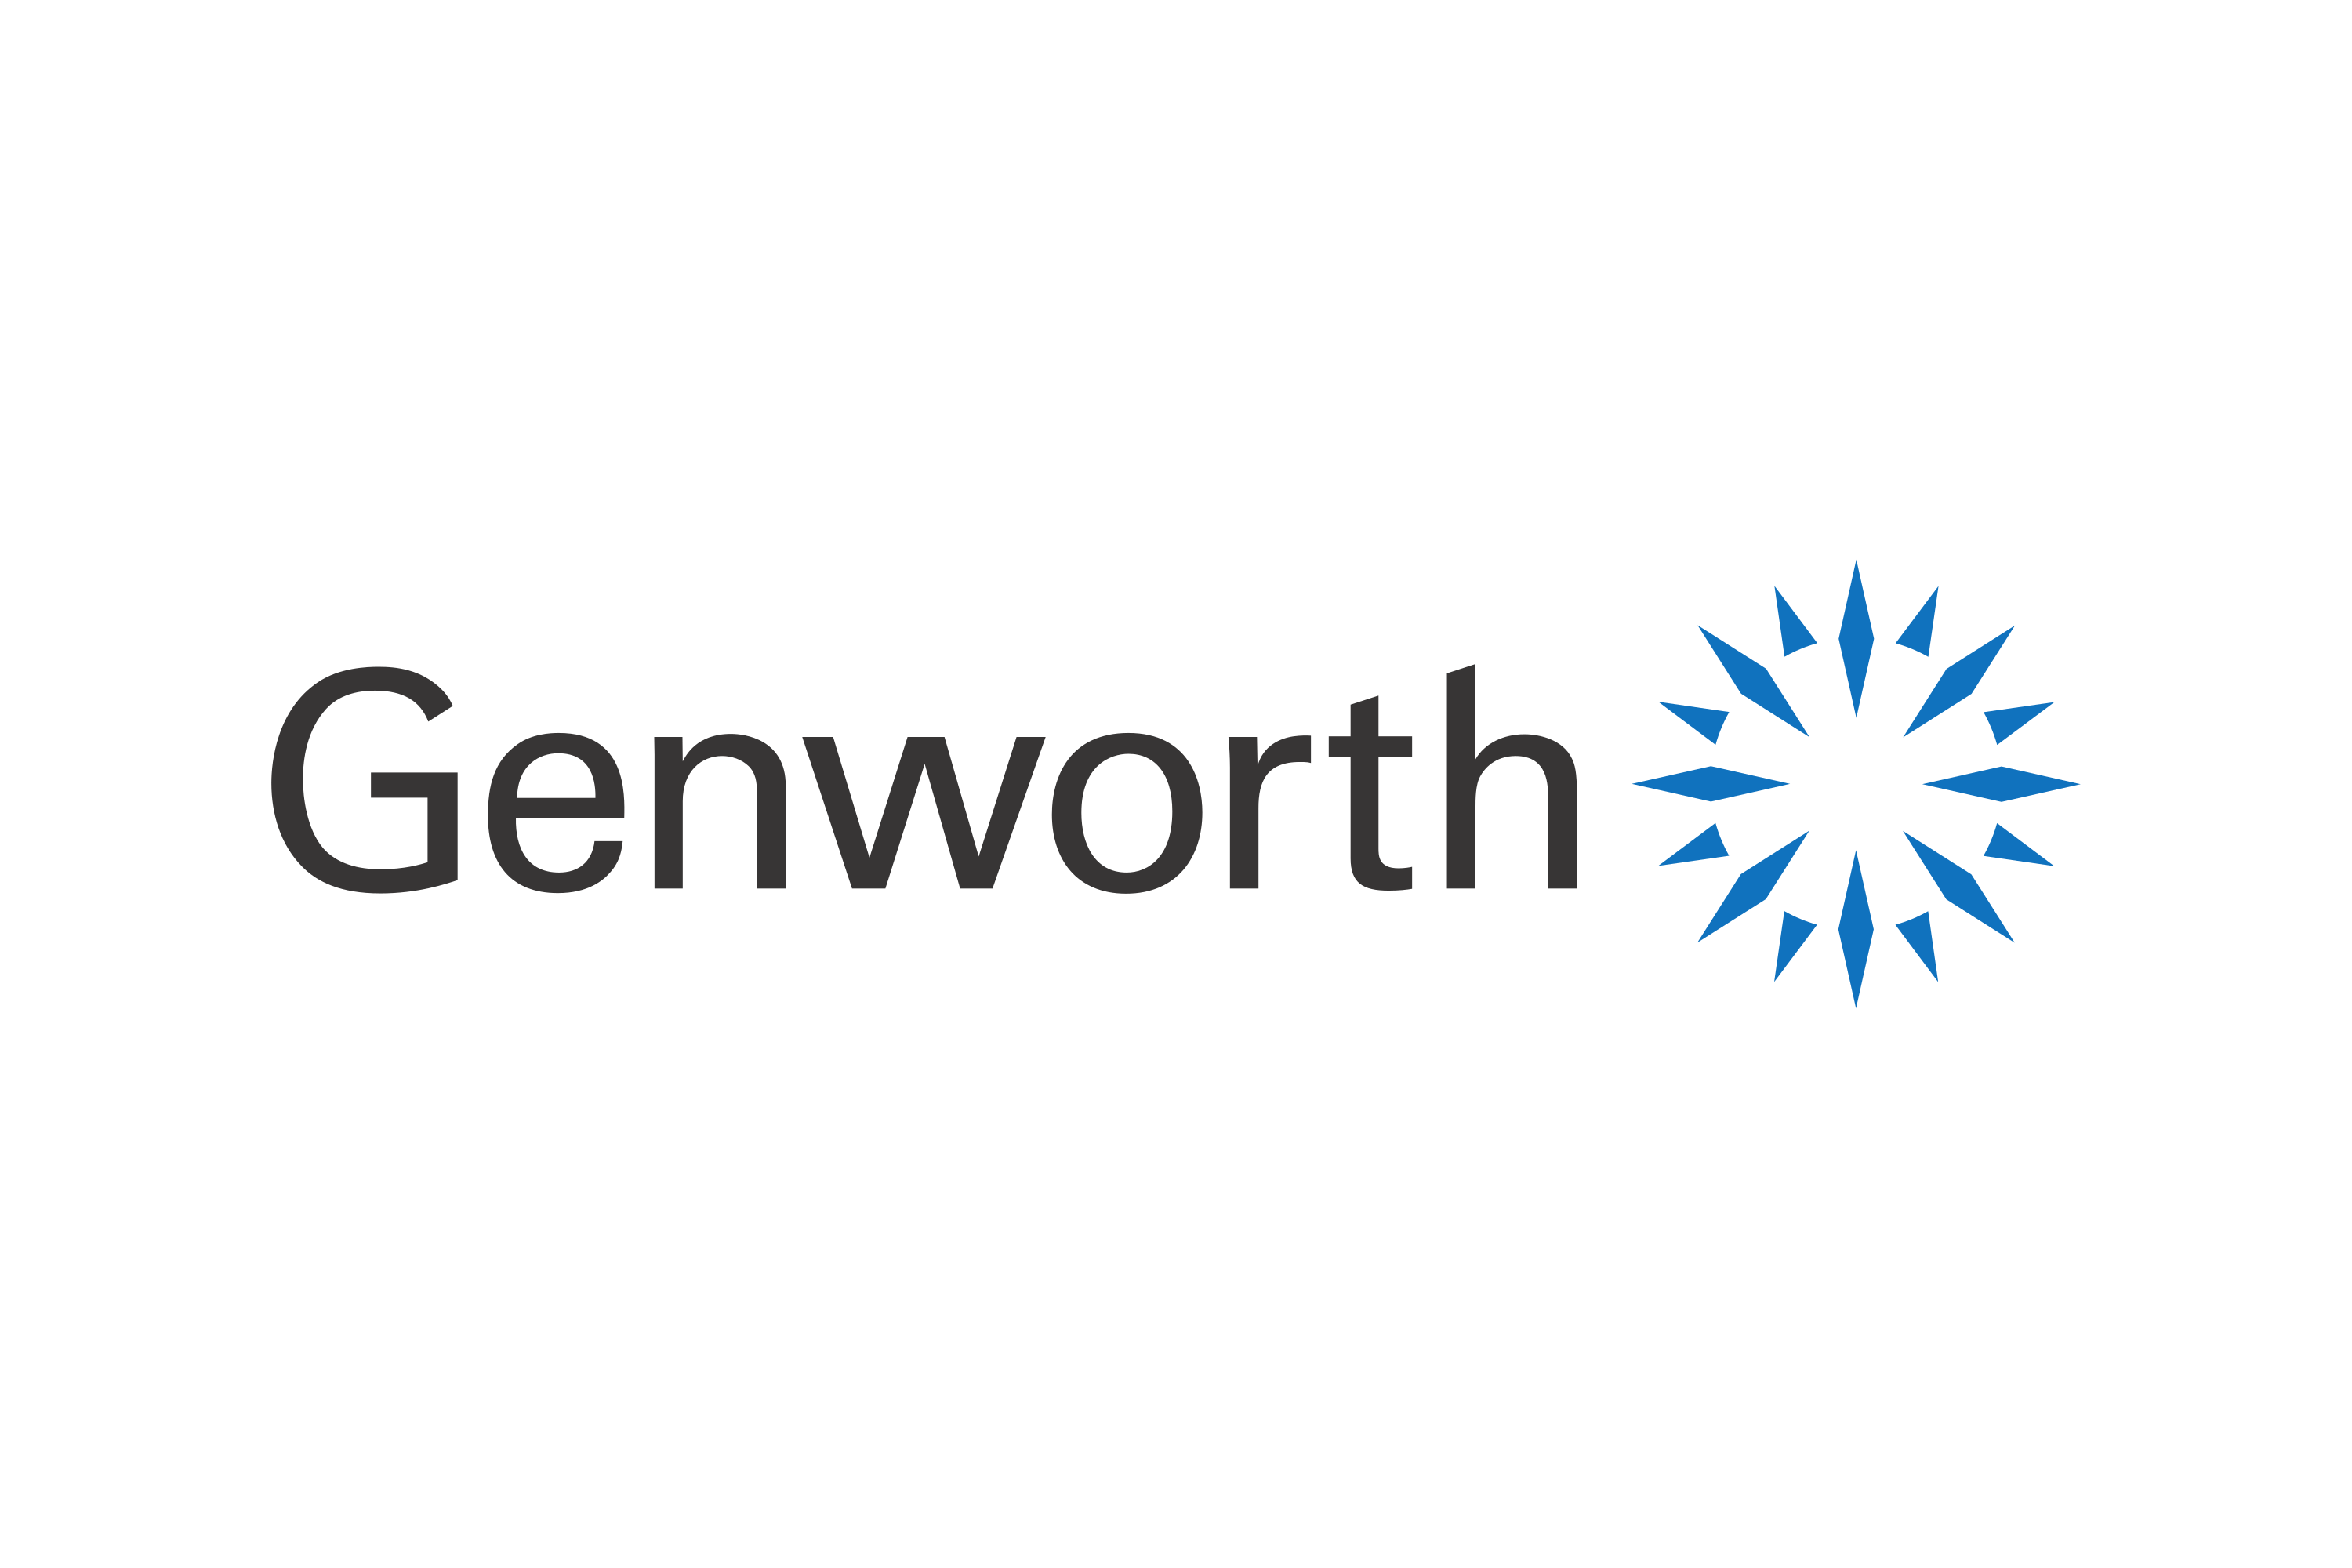 Genworth Financial Logo